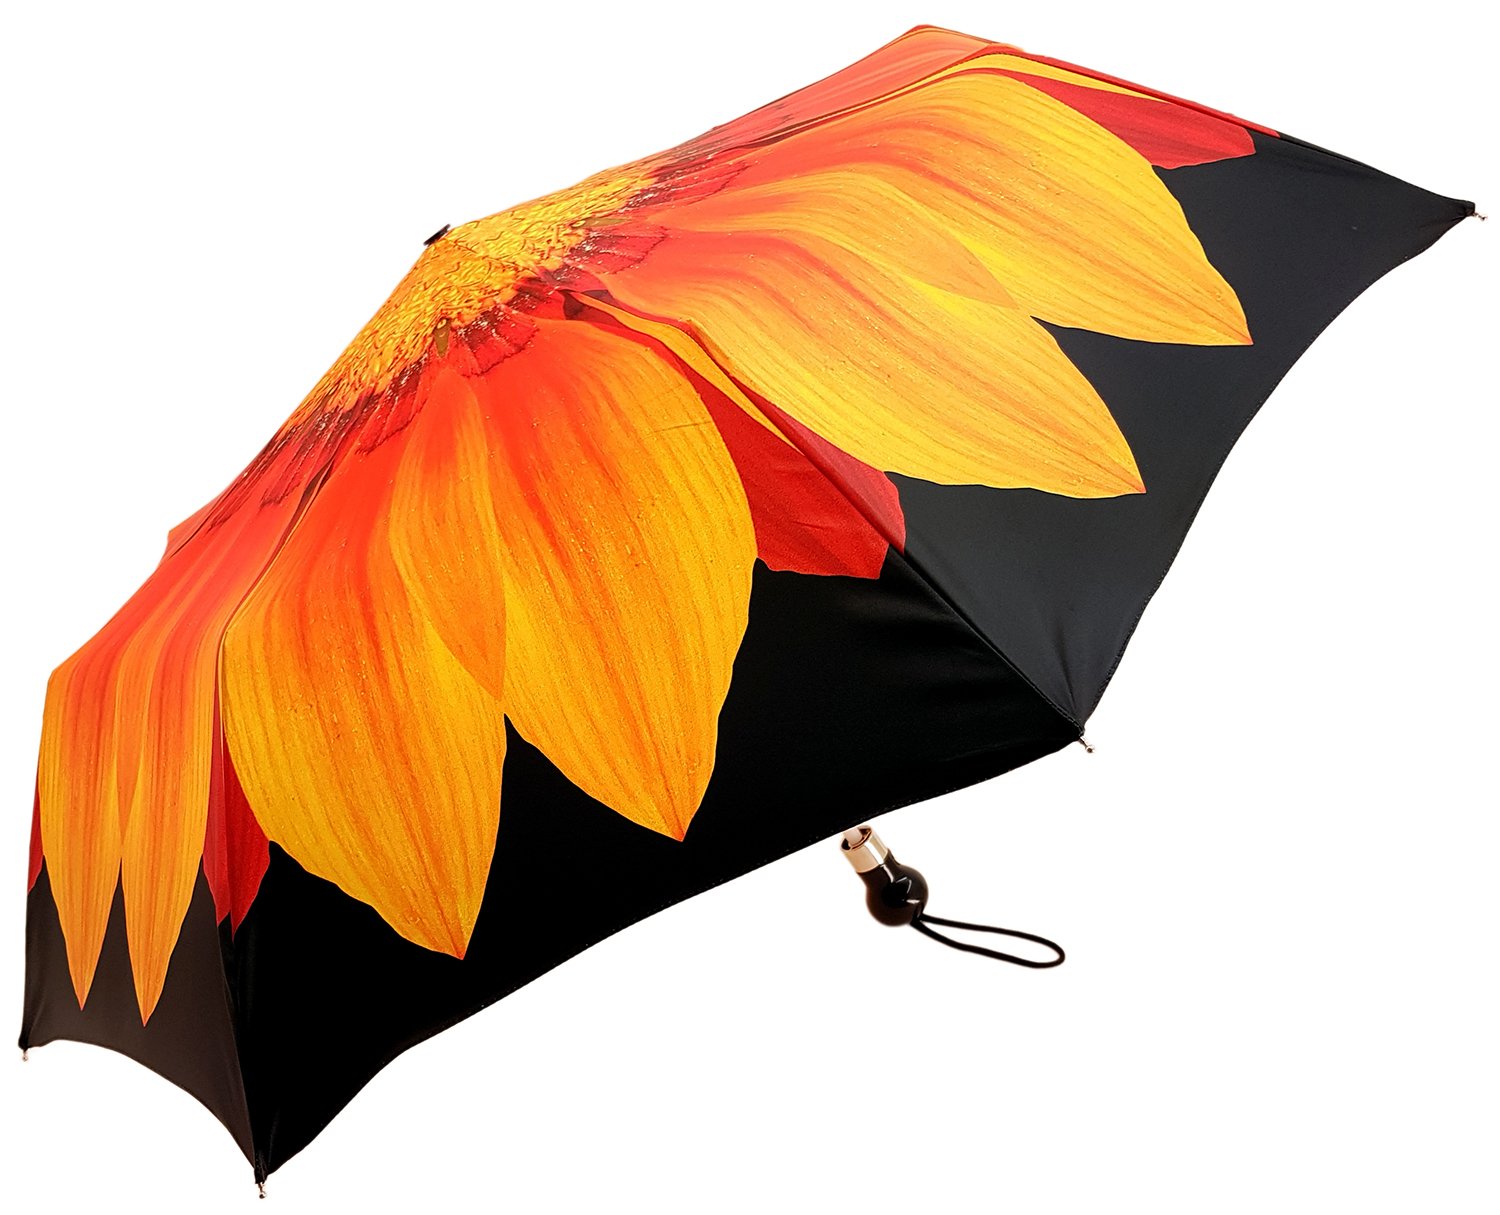 Foldable Women's Umbrella - Orange Flower Pattern - il-marchesato